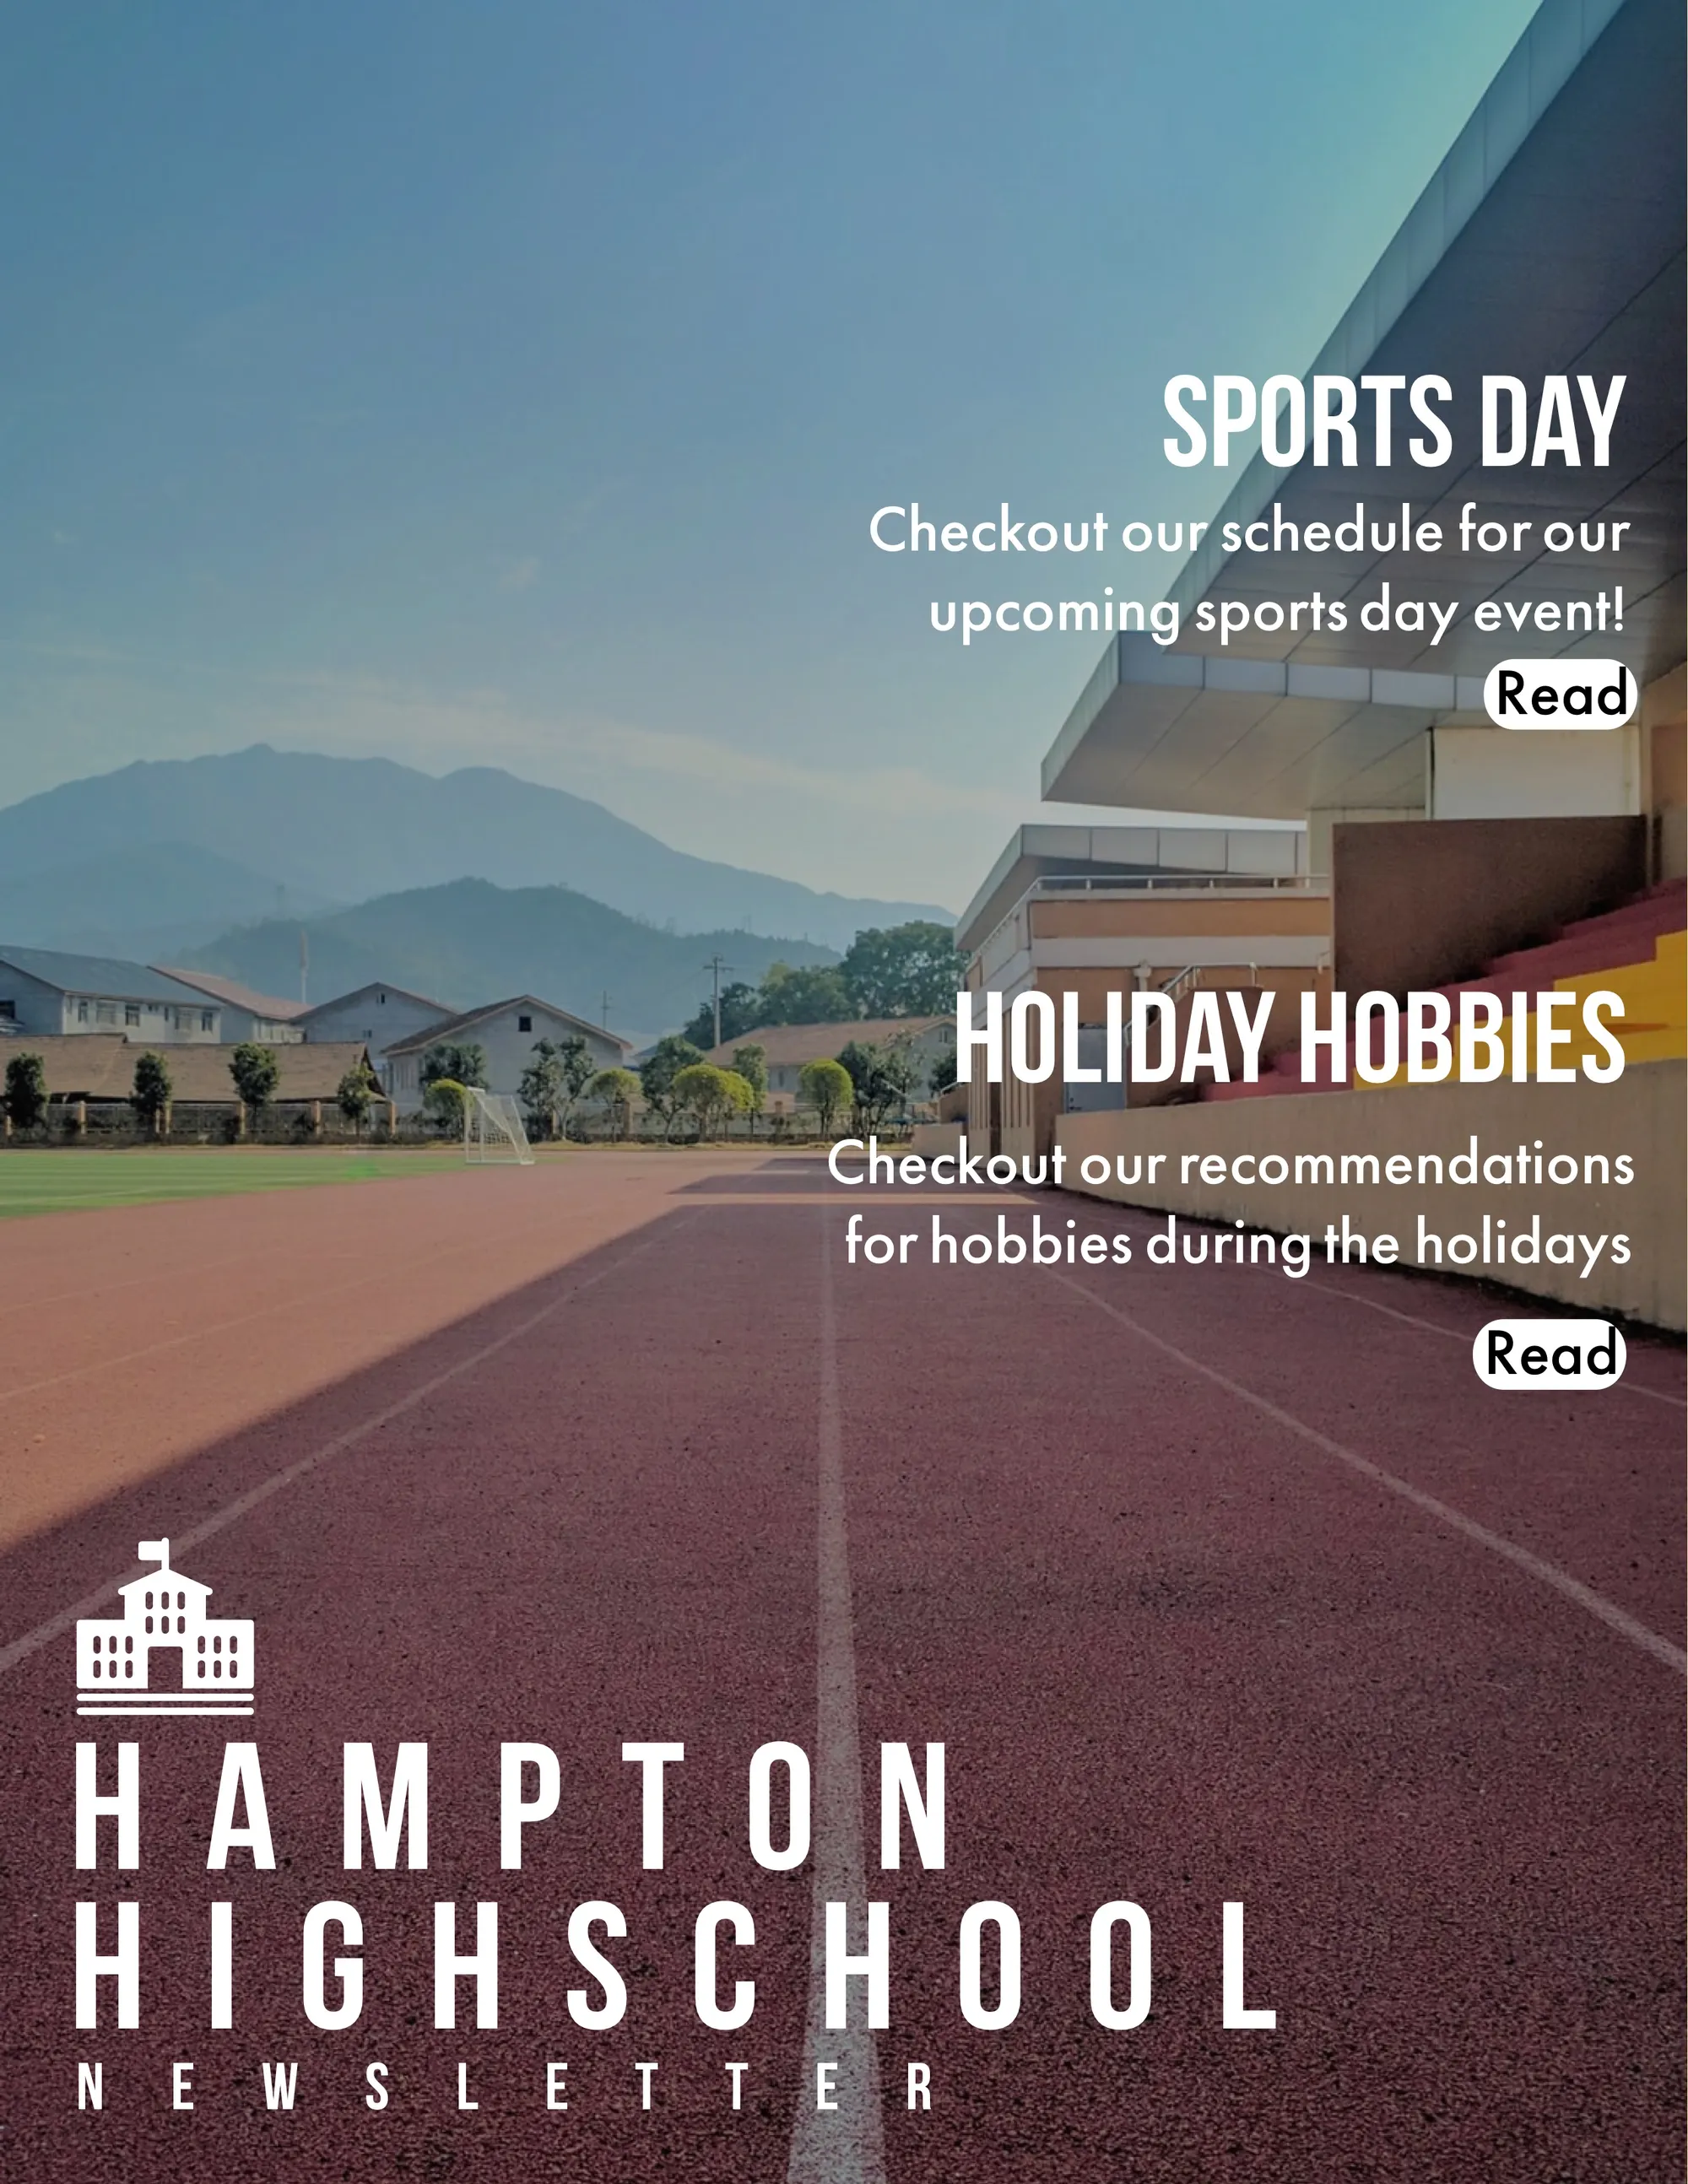 Running Track Photo High School Newsletter